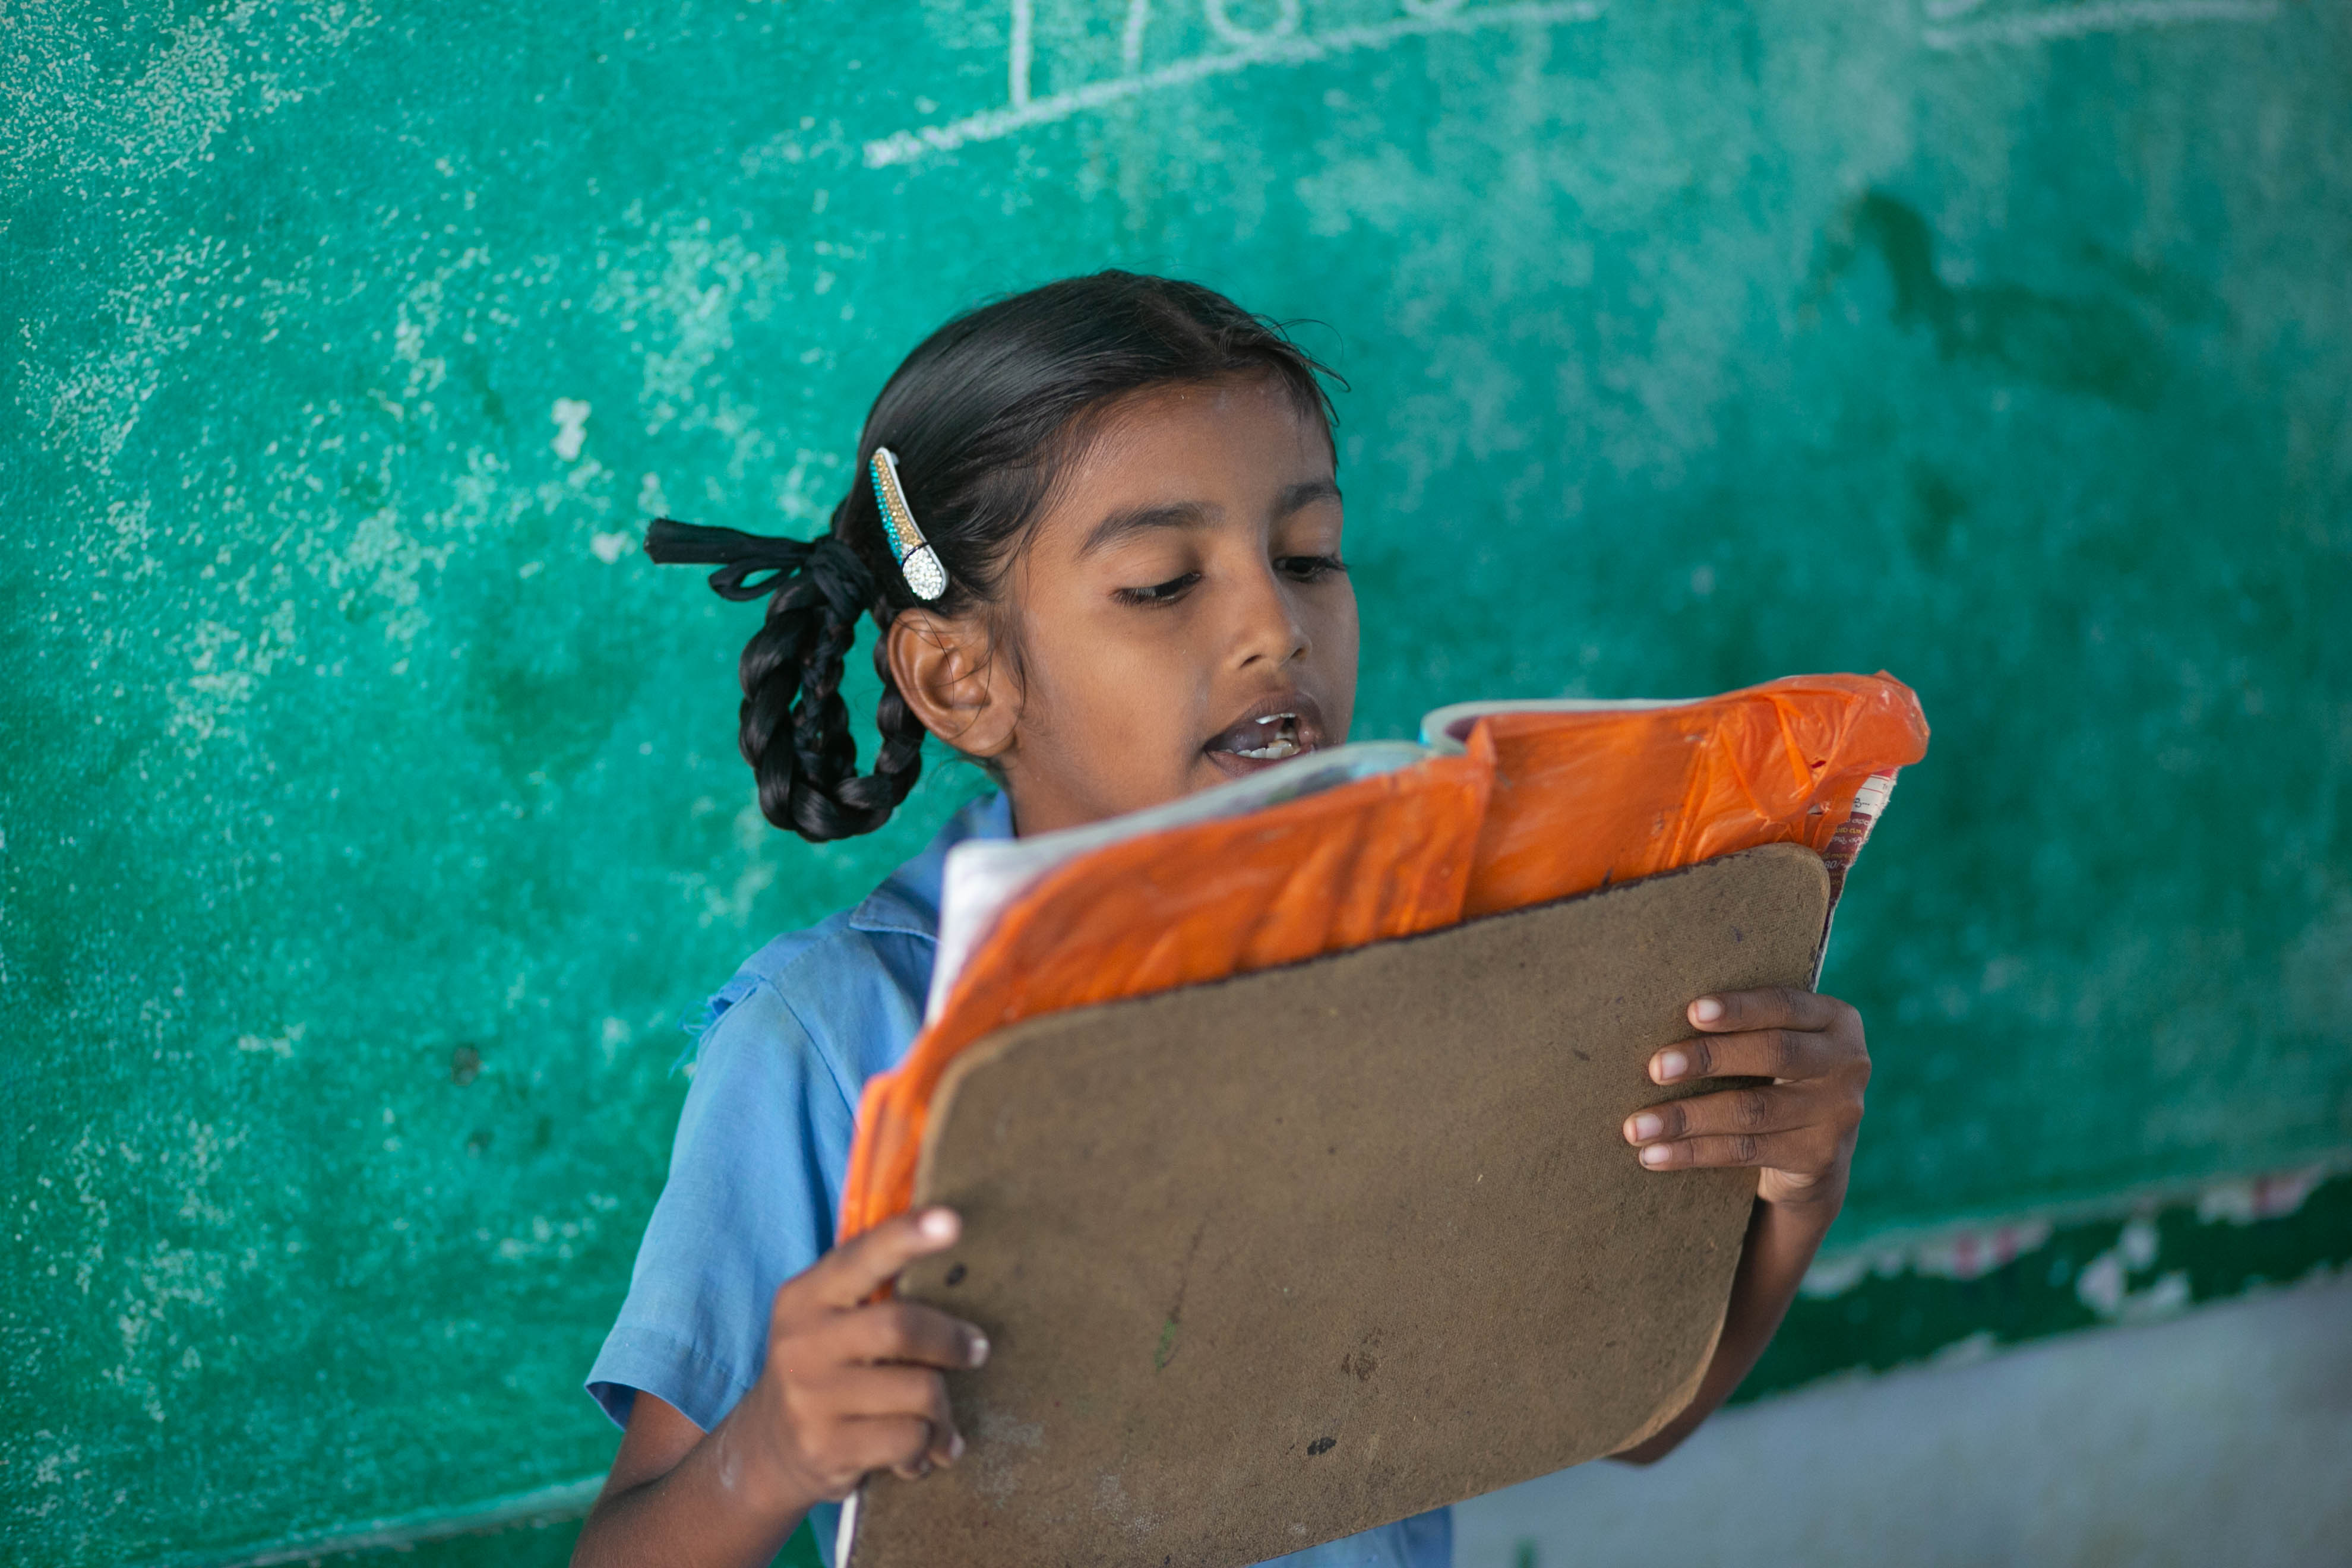 Girl at school in India